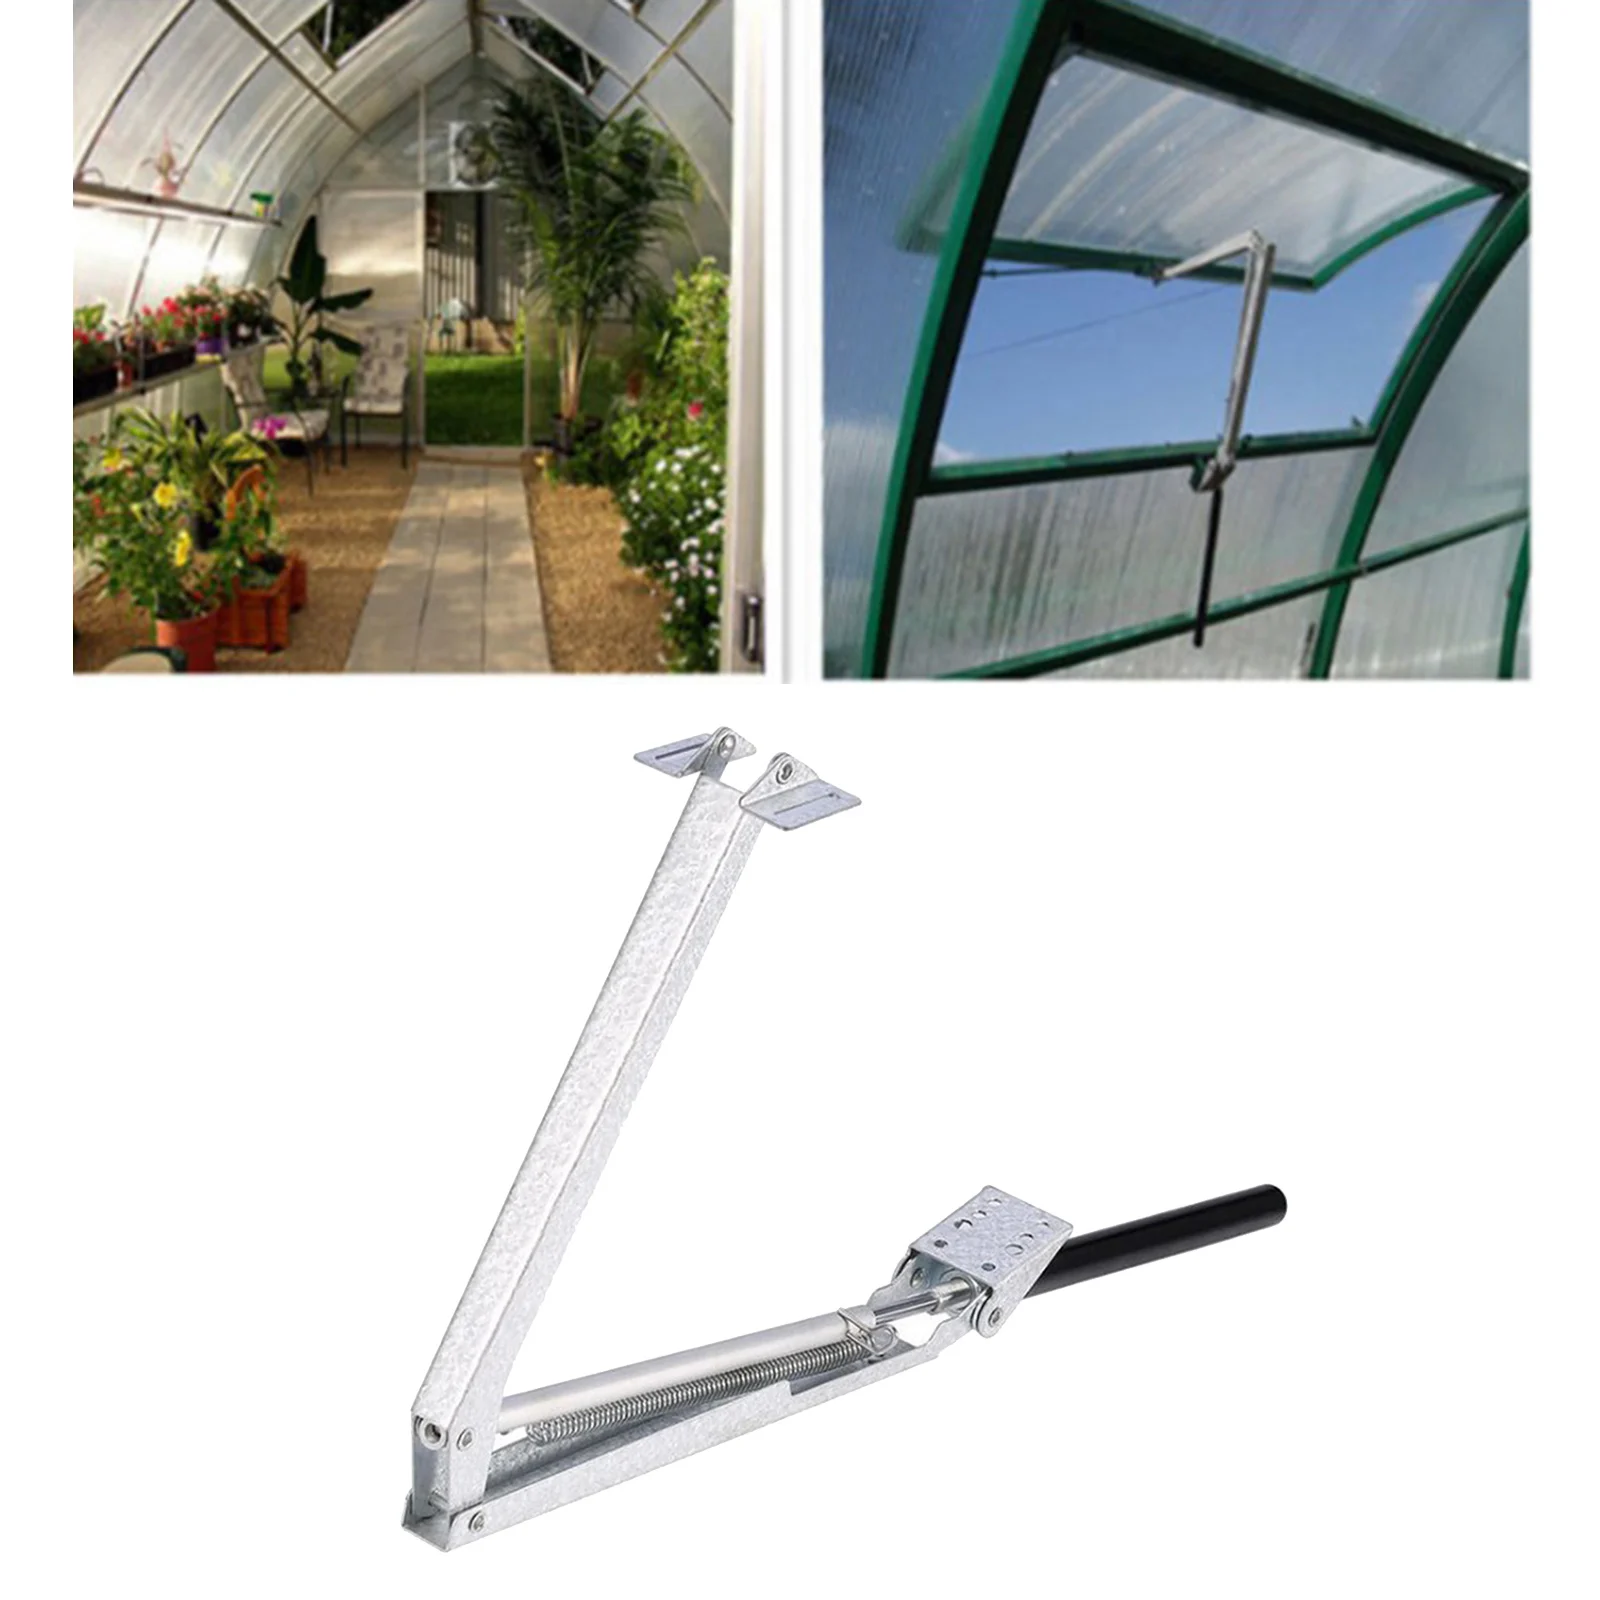 Automatic greenhouse window opener Simple spring adjustable auto vent